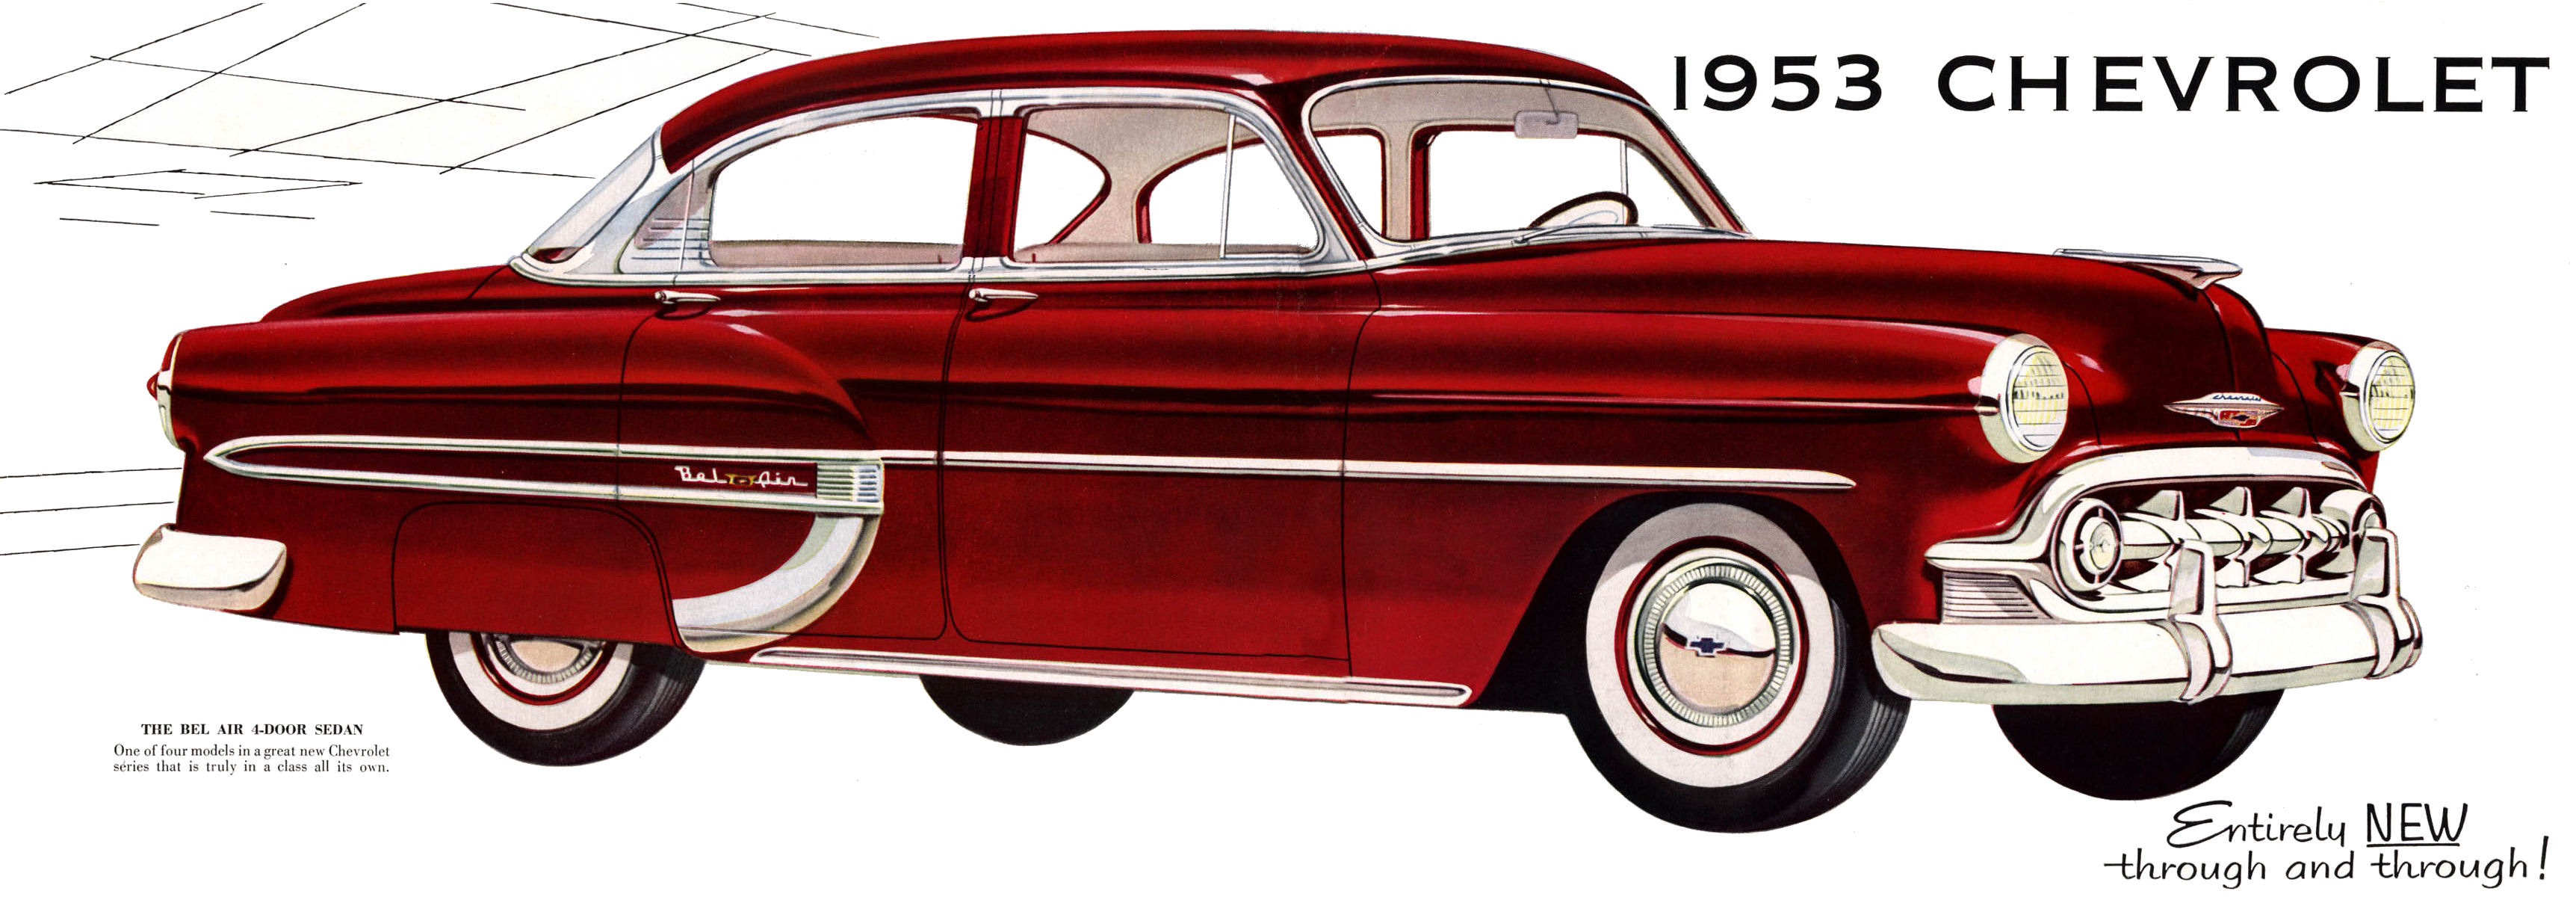 1953 Chevrolet Brochure